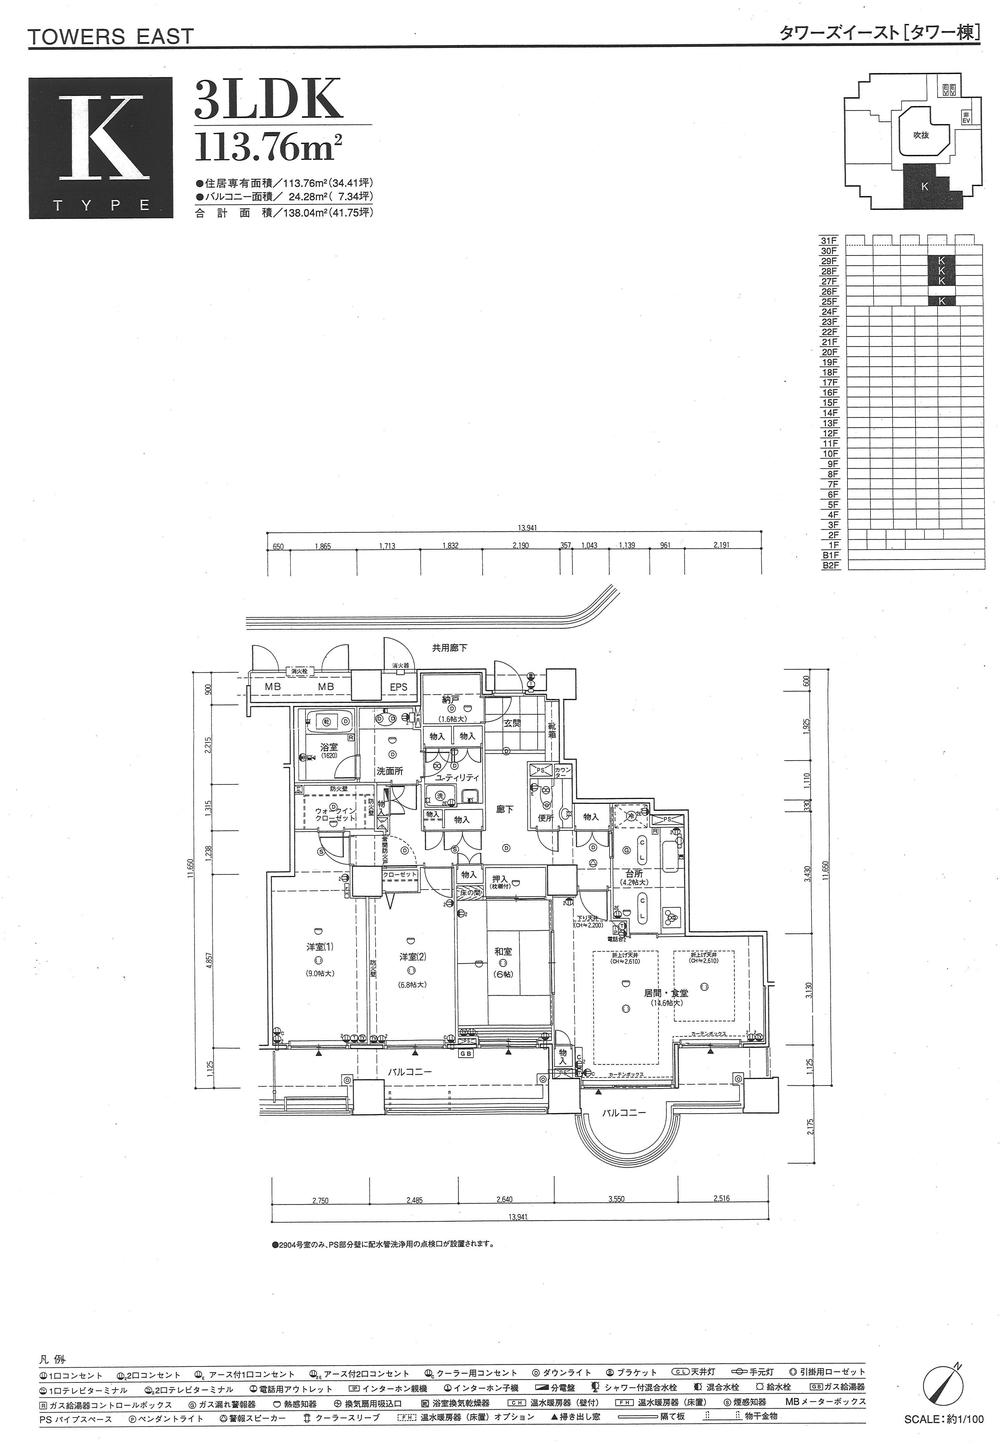 Floor plan. 3LDK, Price 21,800,000 yen, Footprint 113.76 sq m , Balcony area 24.28 sq m